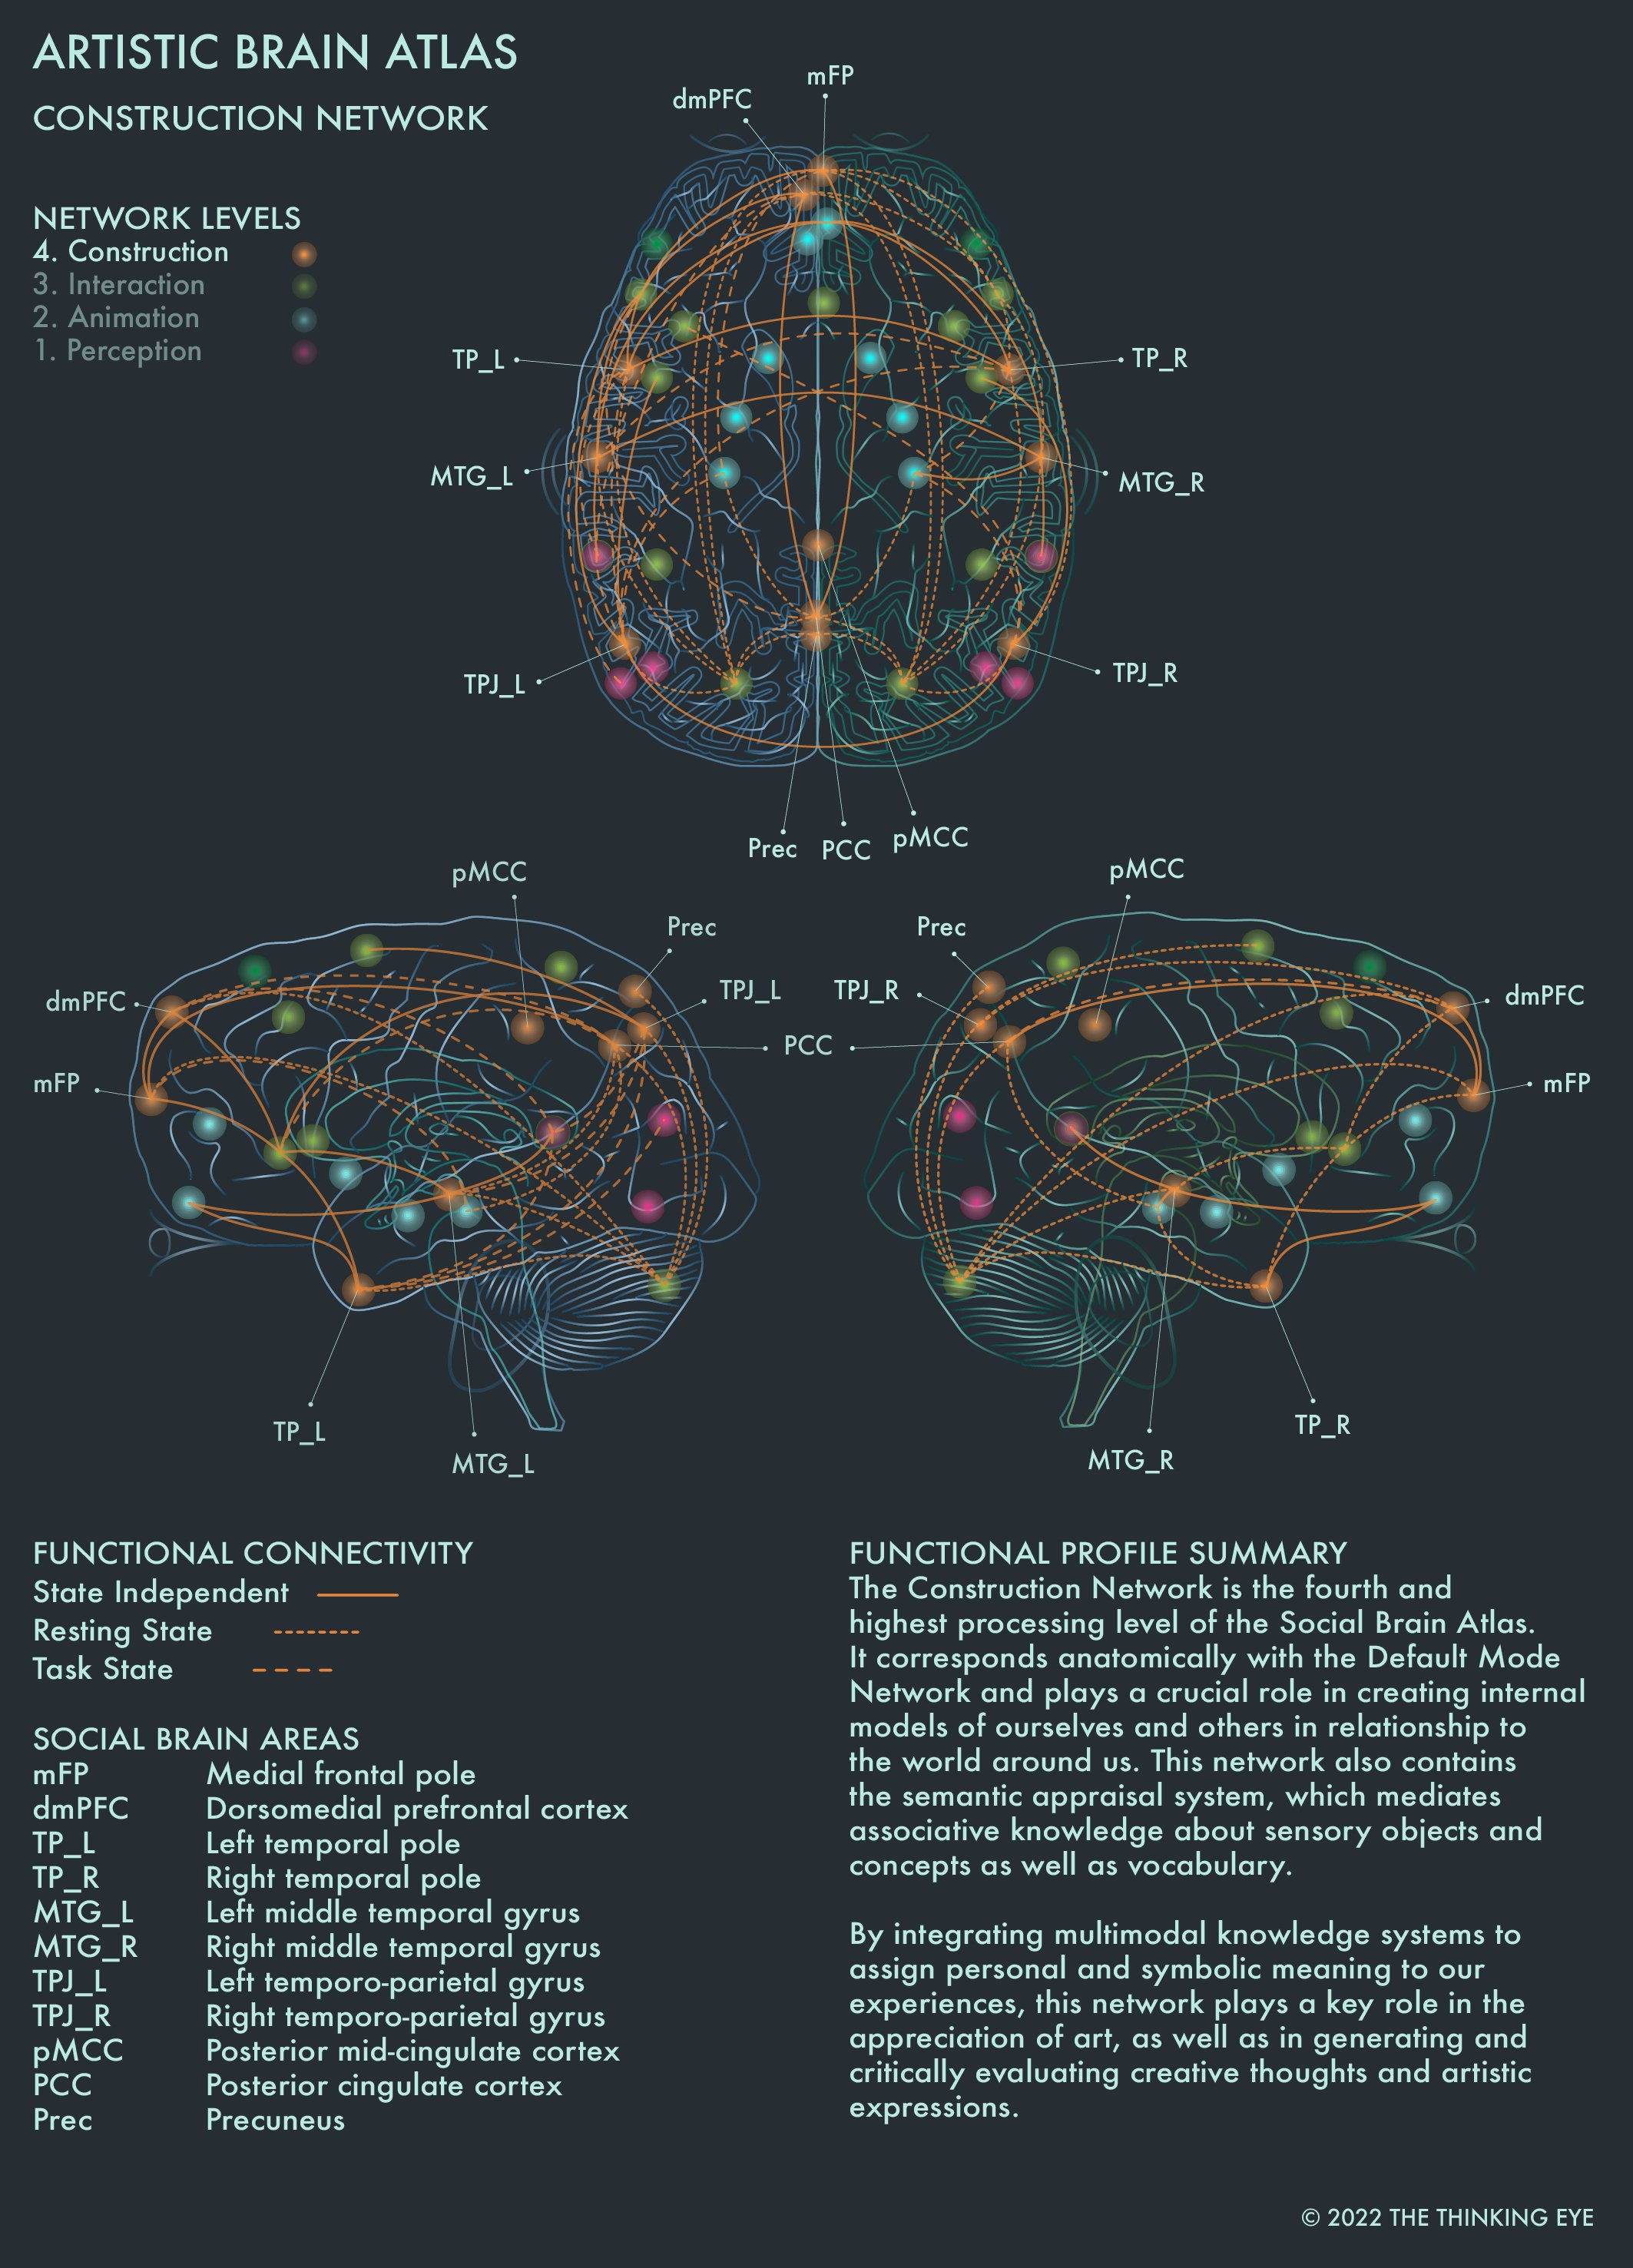 04 CN_Artistic Brain Atlas_Overview Social Brain Atlas.jpg